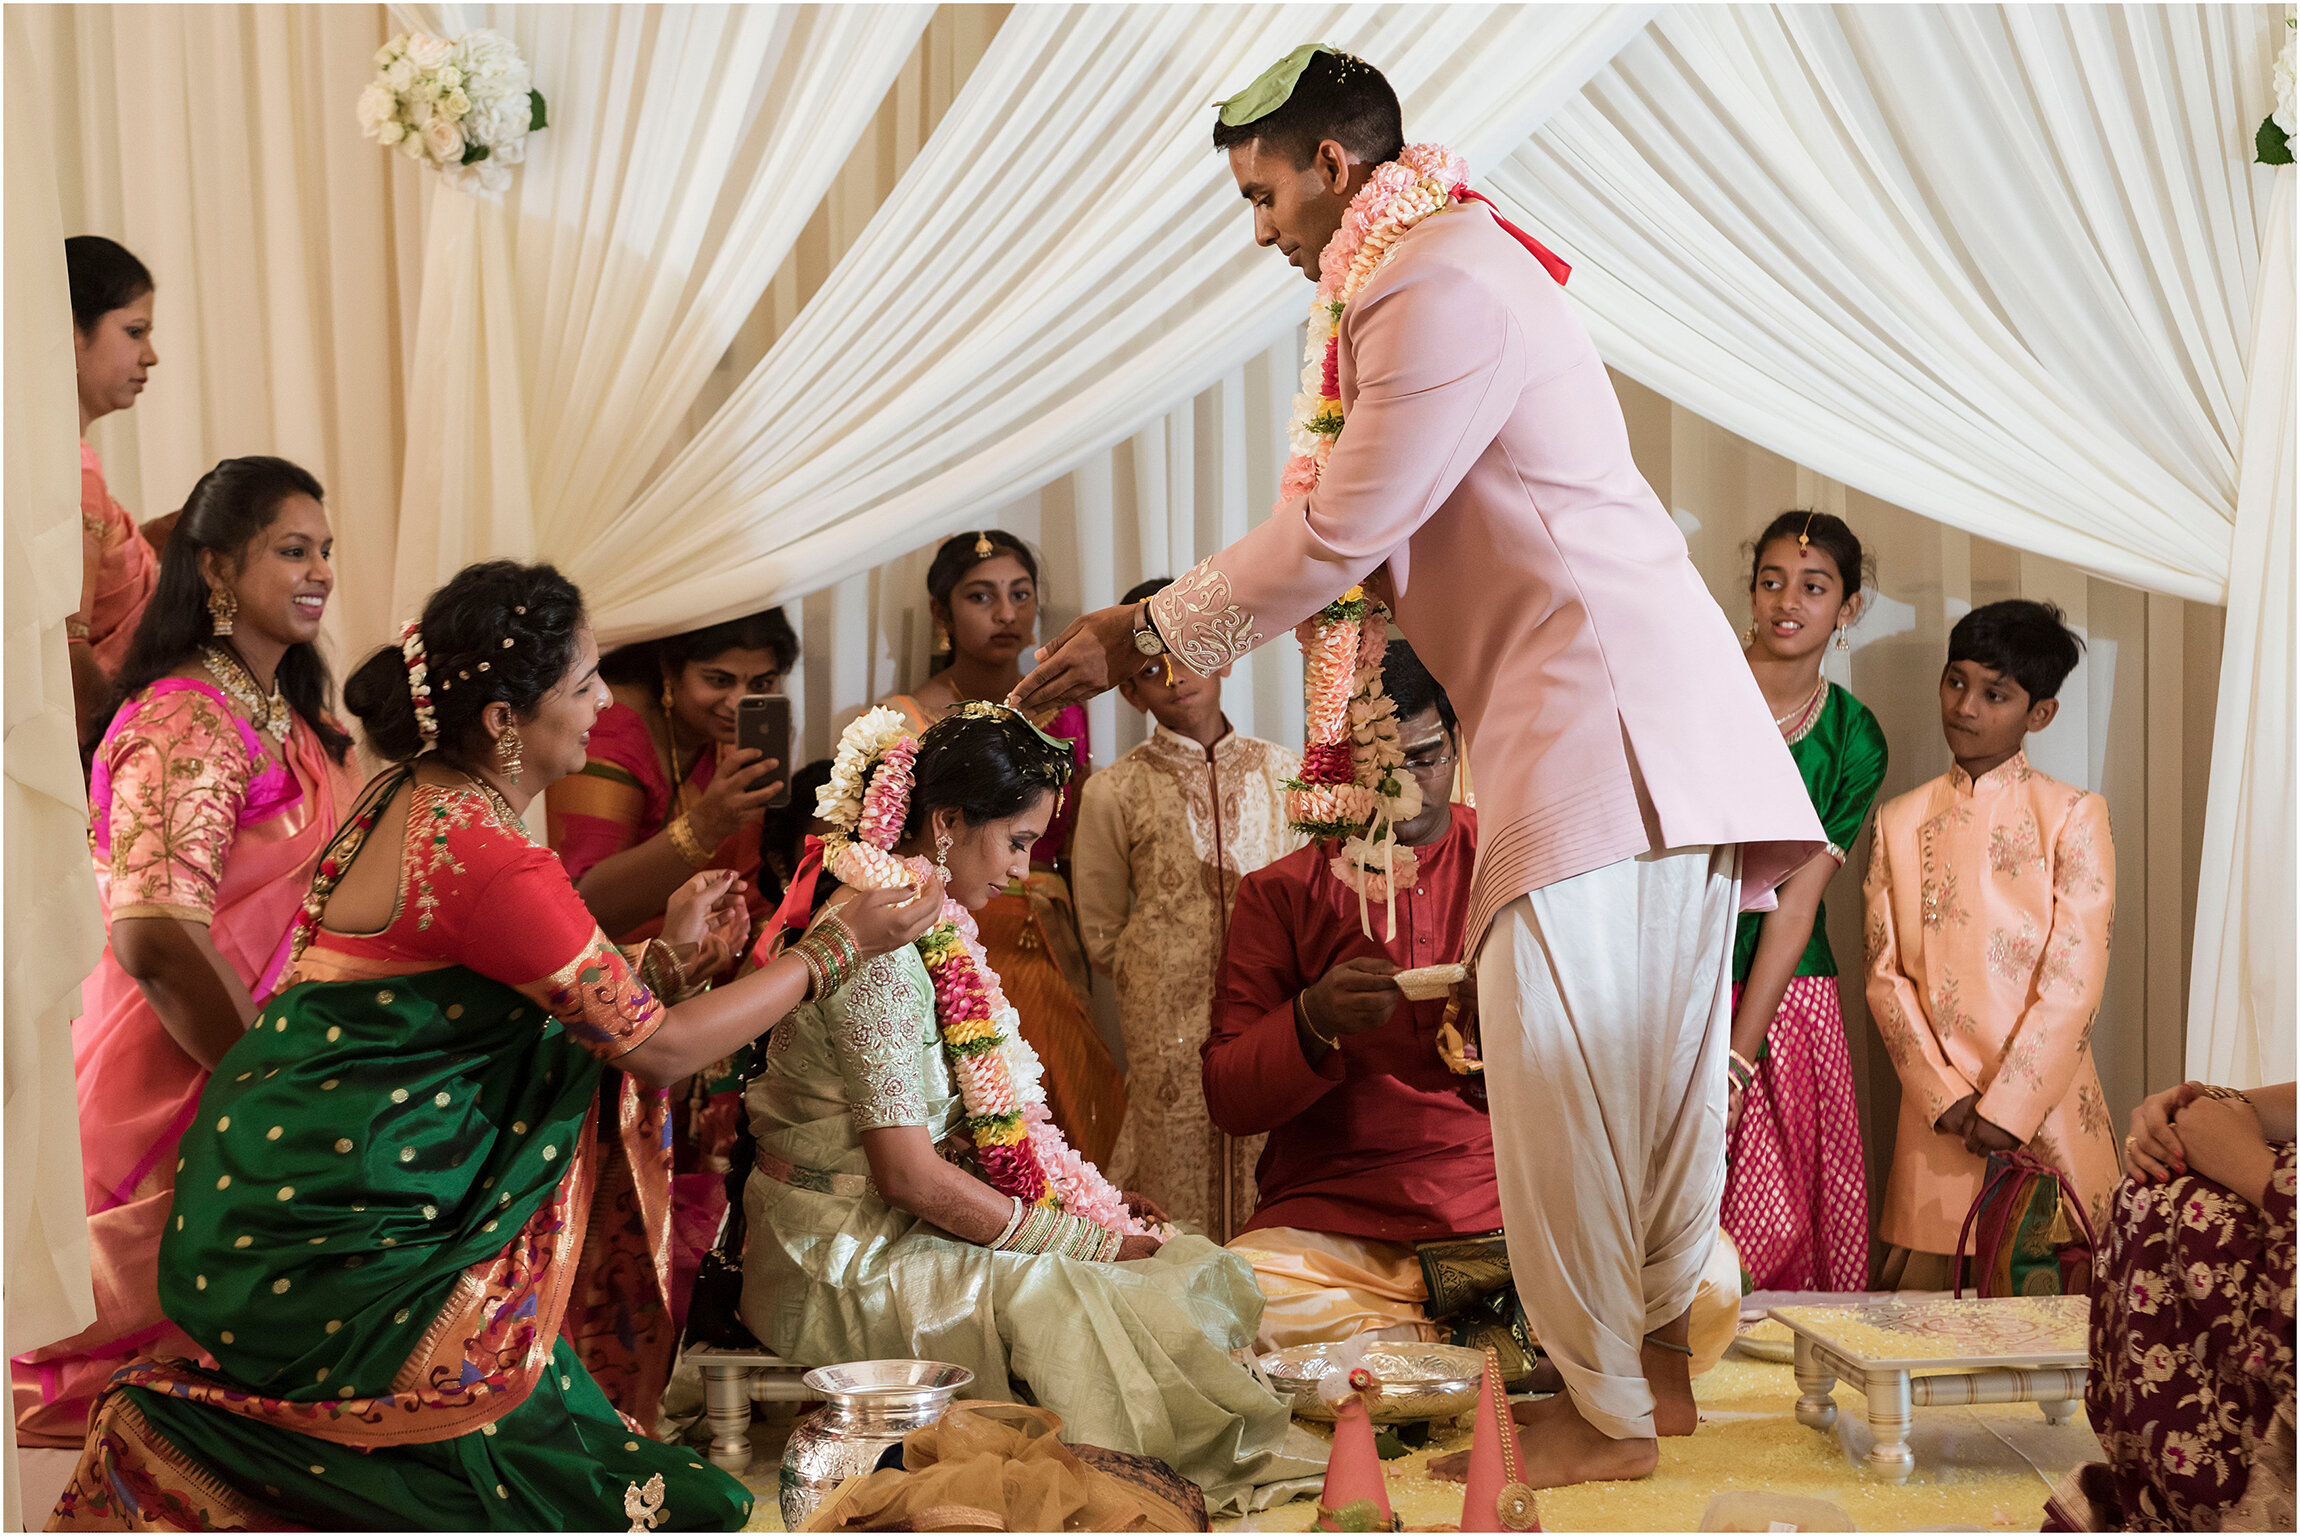 ©FianderFoto_Hindu Wedding_Bermuda_068.jpg